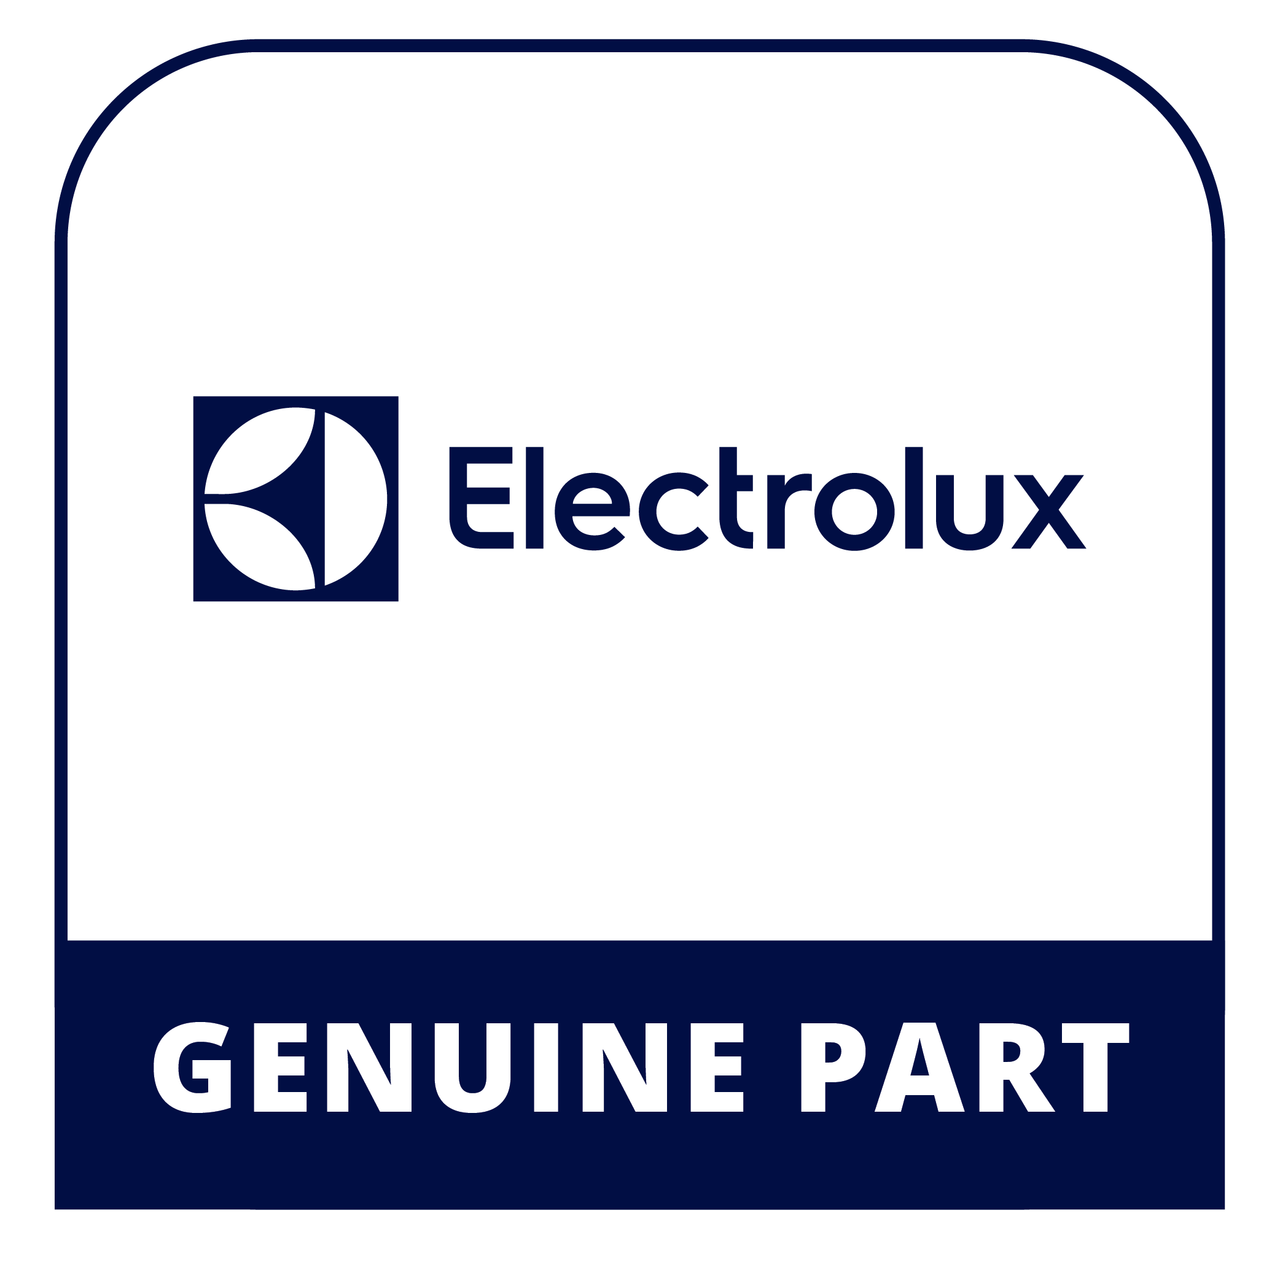 Frigidaire - Electrolux 242026457 Dsp Door-Frz - Genuine Electrolux Part